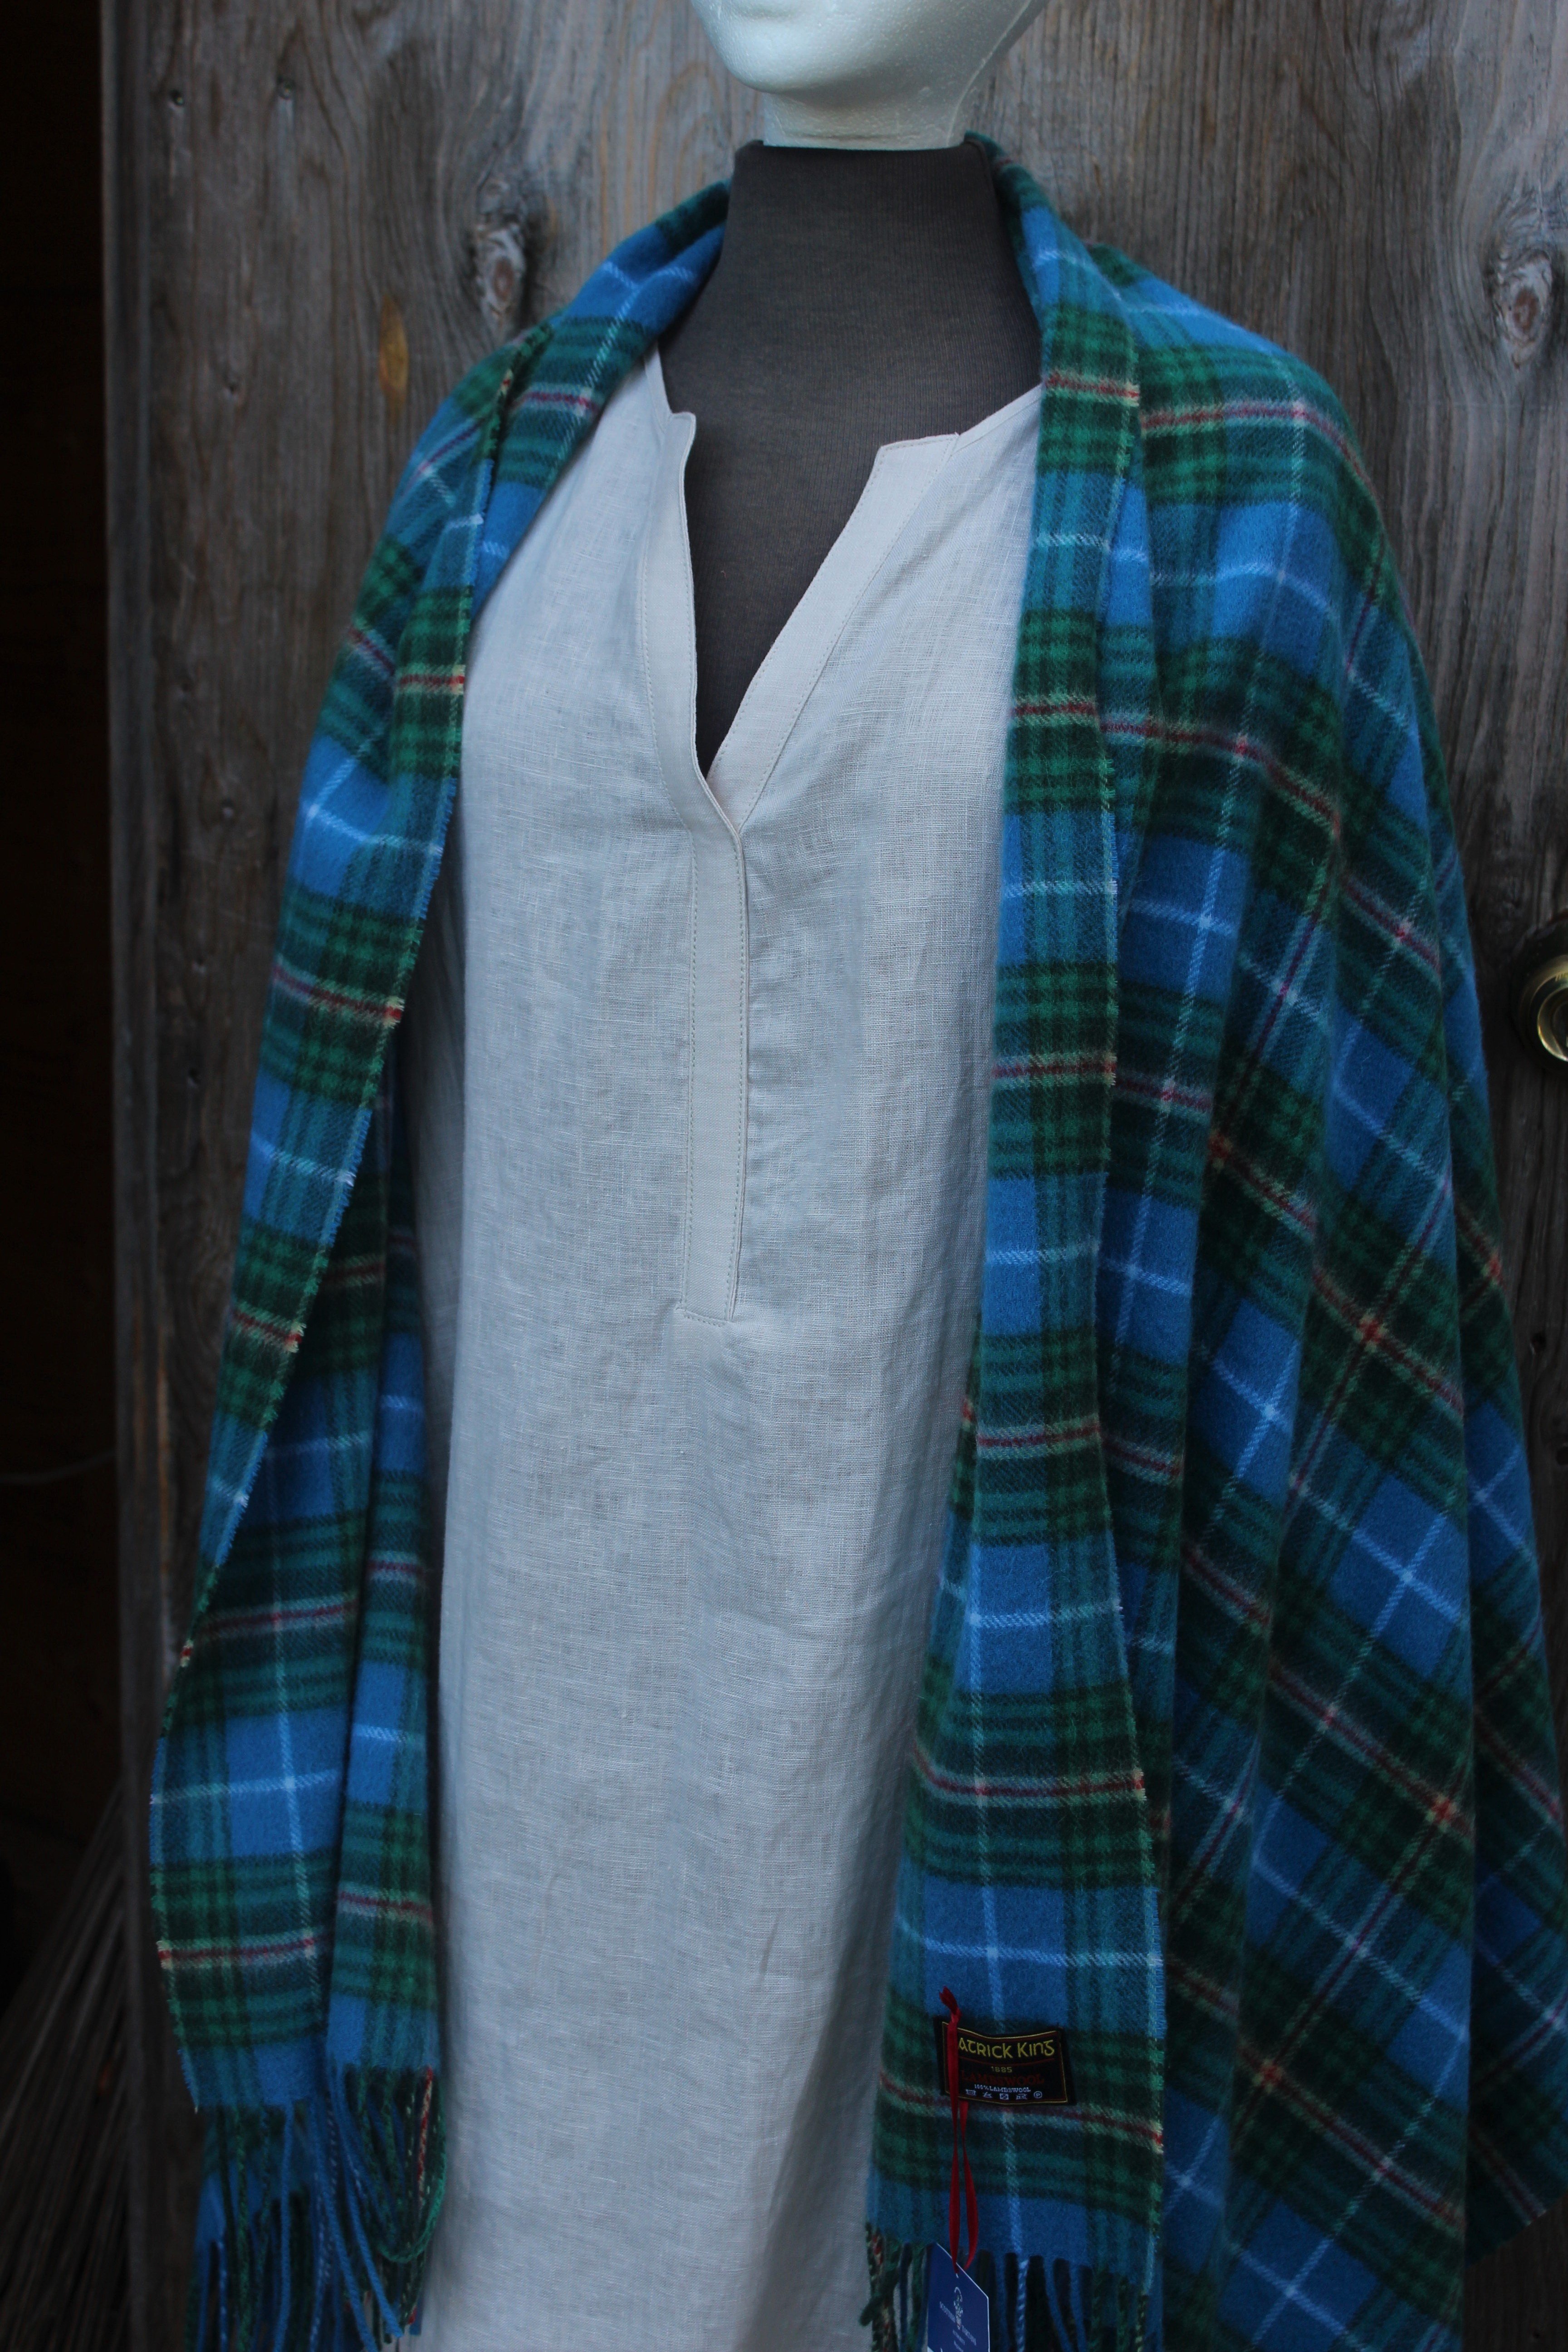 Nova Scotia Tartan Cape- $136.00
100% Lambswool, Made in Scotland
Featuring Beige Linen Dress- $88.00